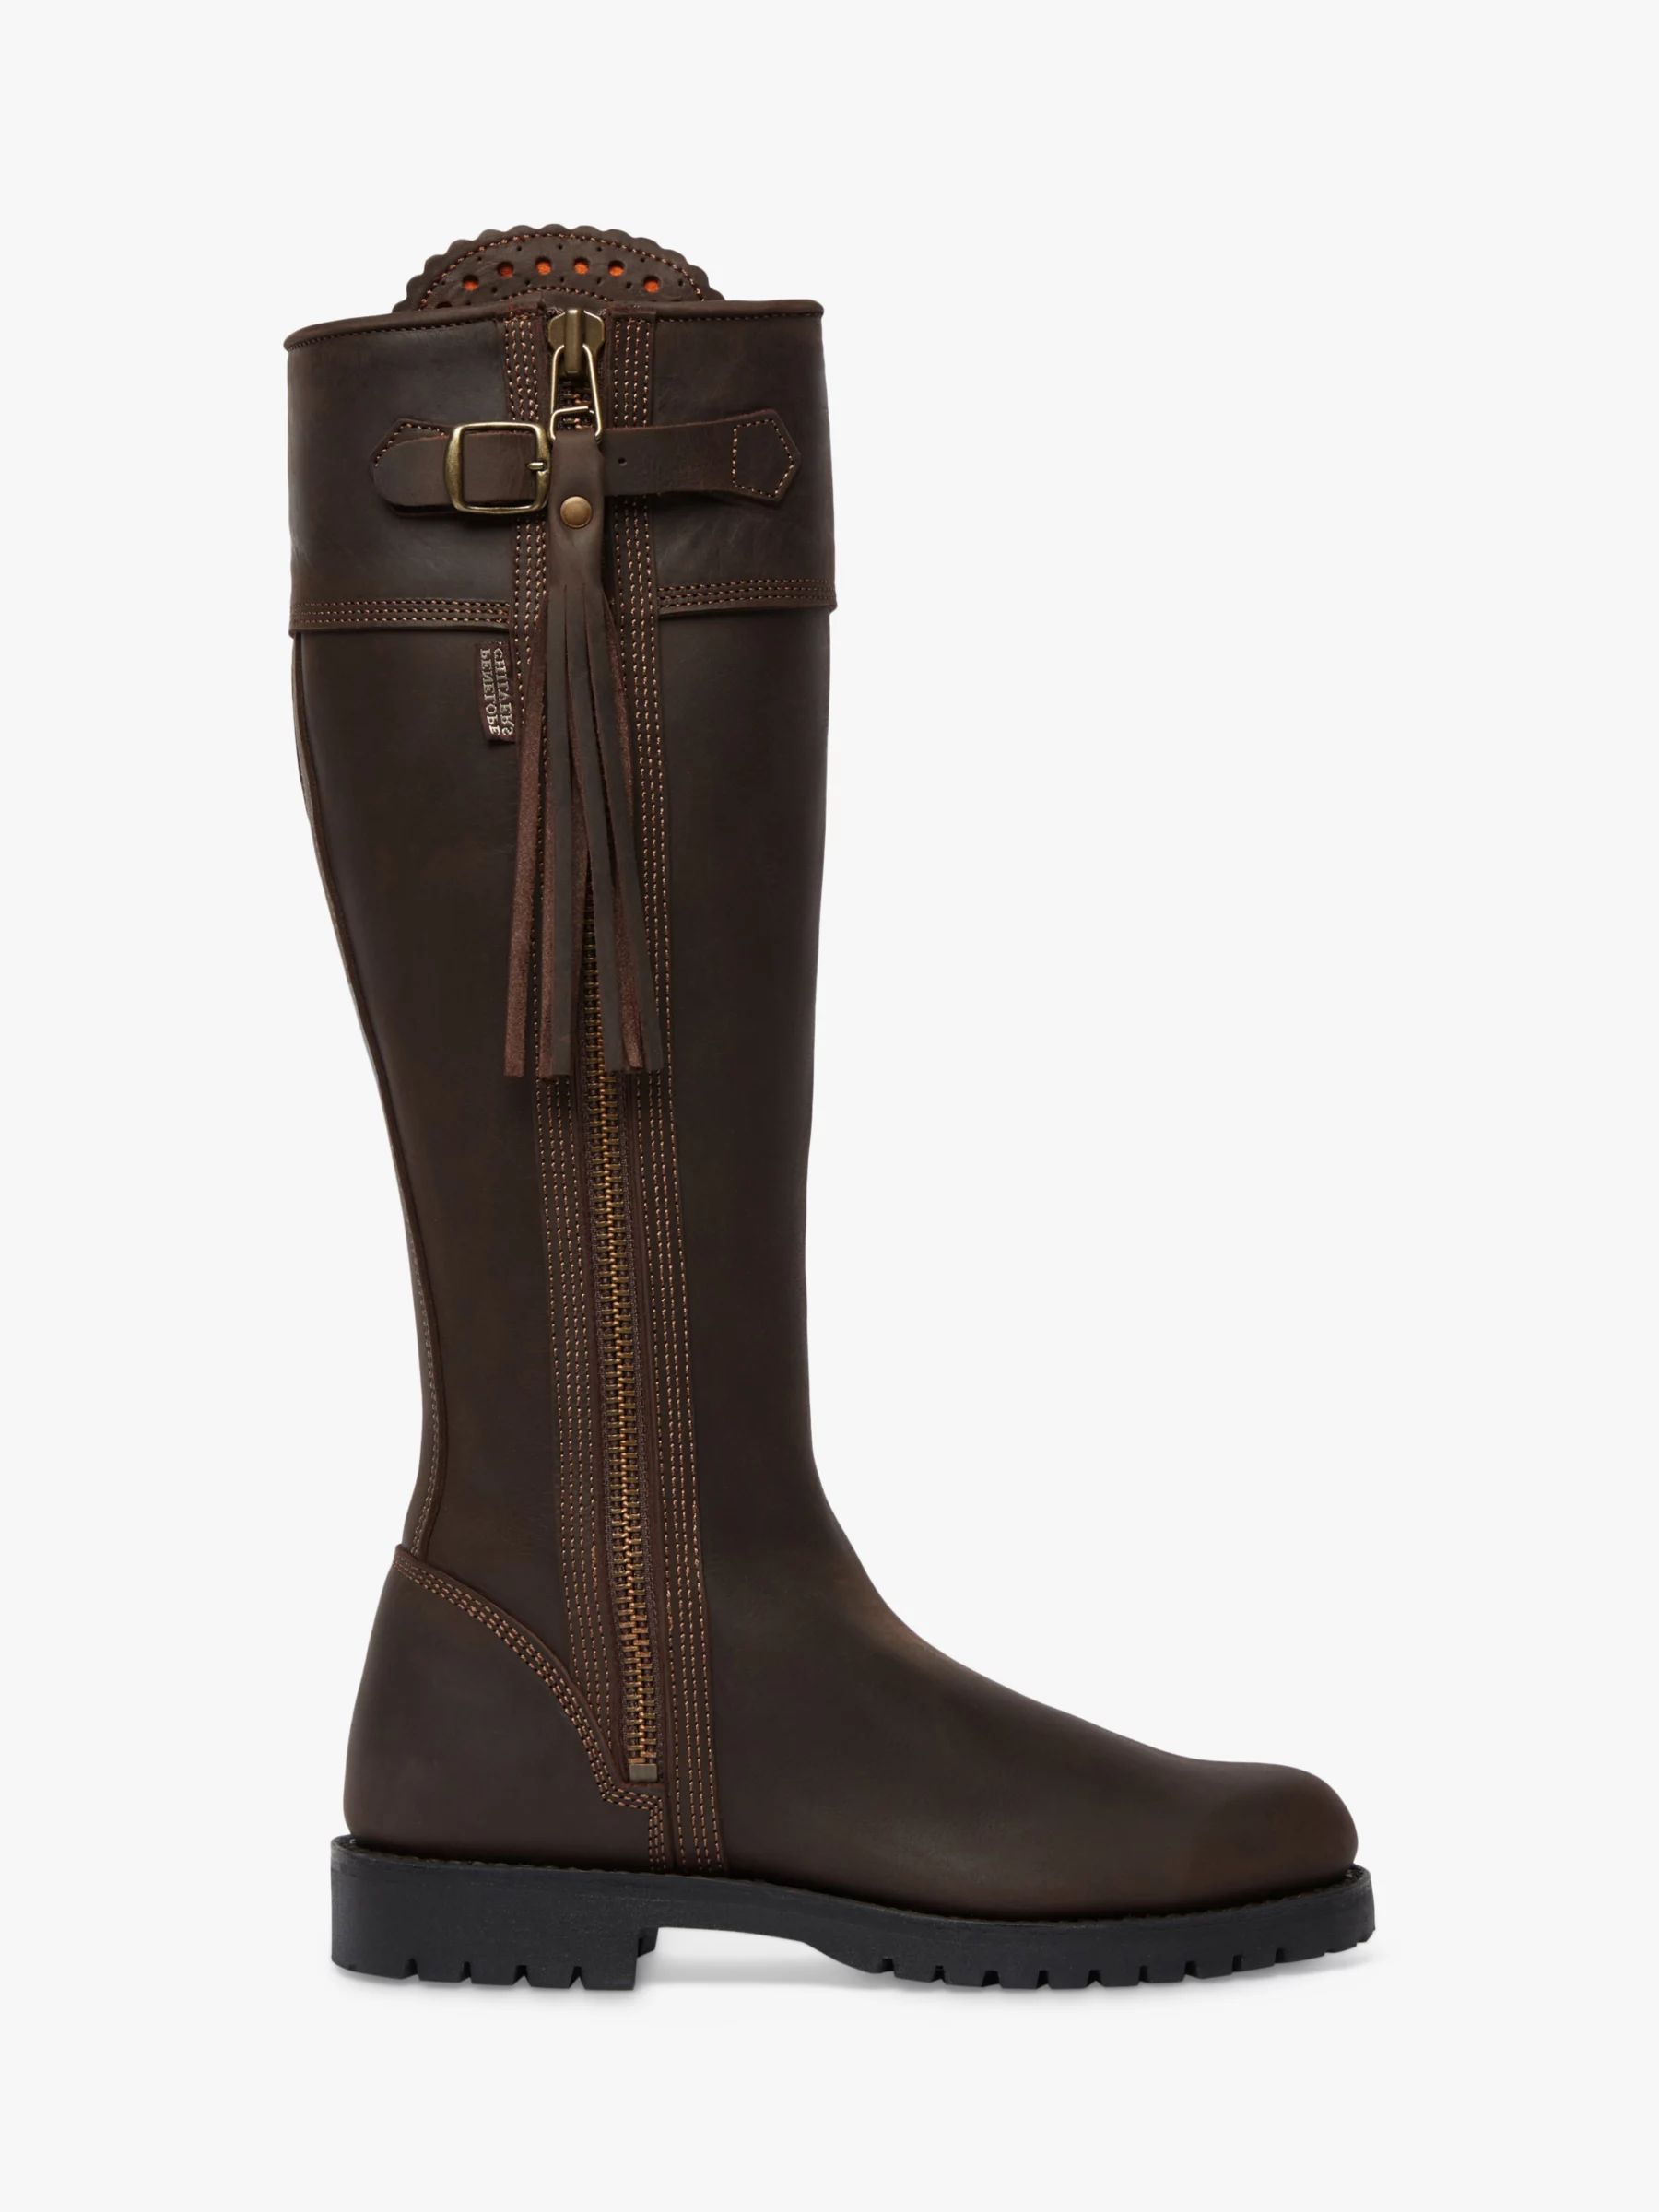 Penelope Chilvers Stand Tassel Knee Boots, Conker | John Lewis (UK)